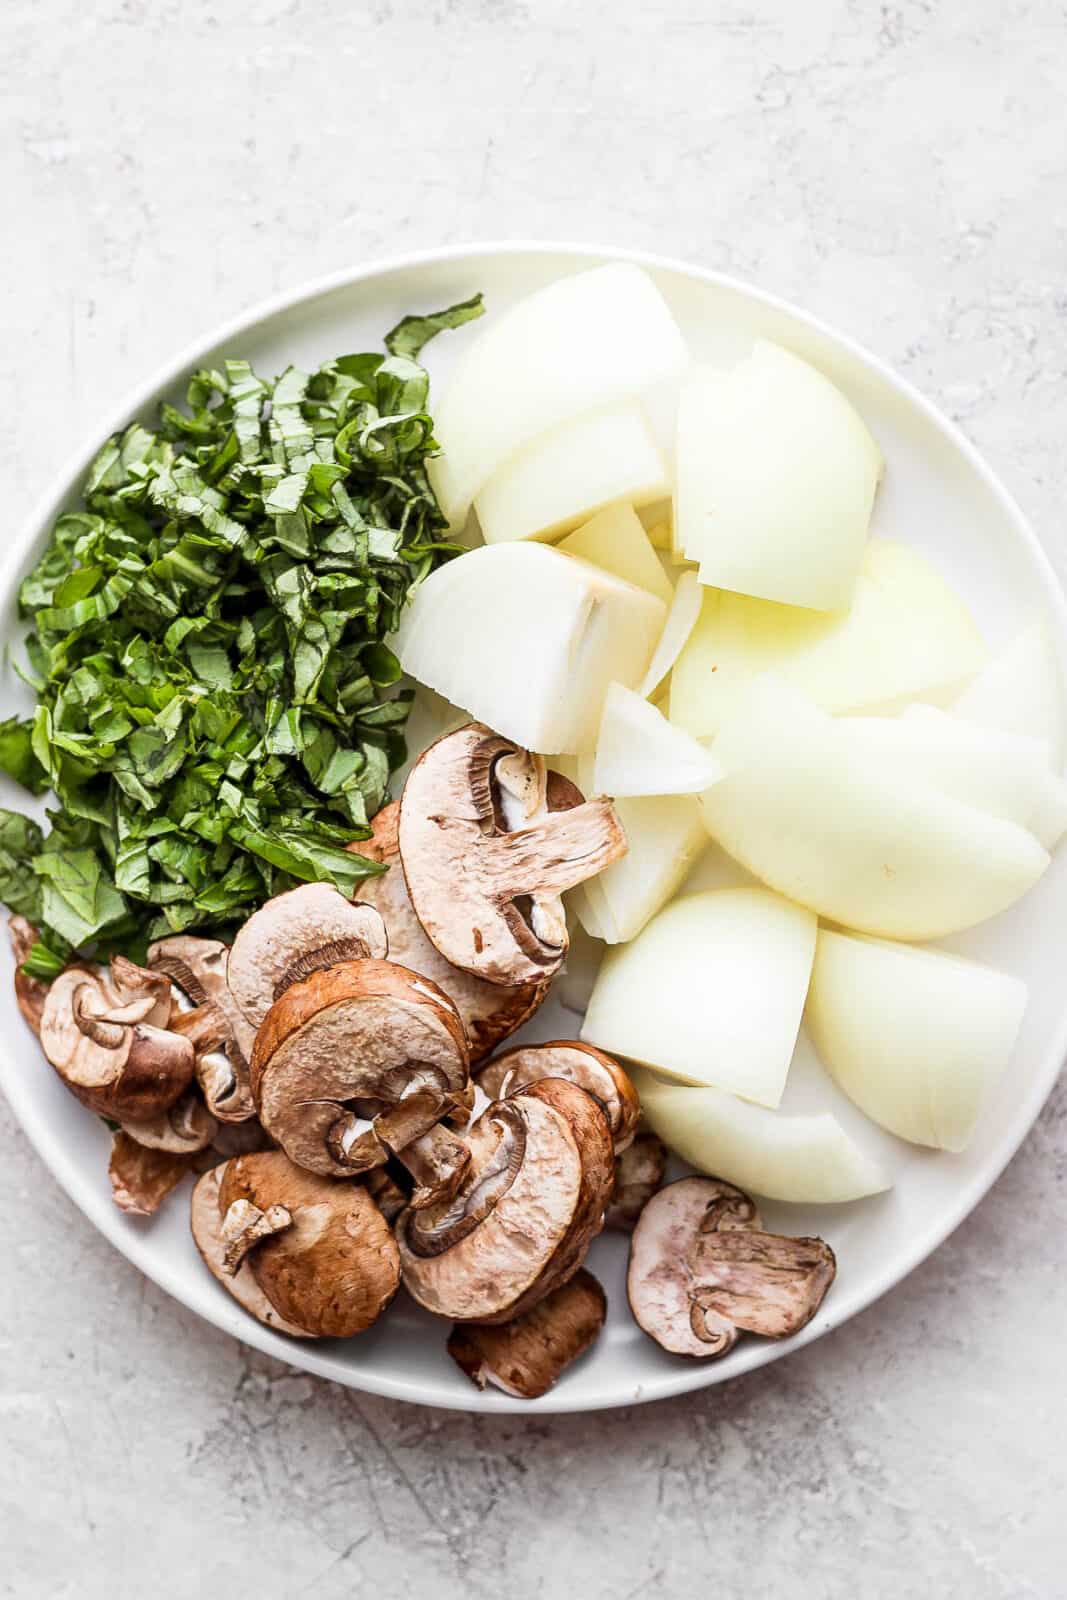 Chopped fresh basil, onion, and mushrooms on a plate.